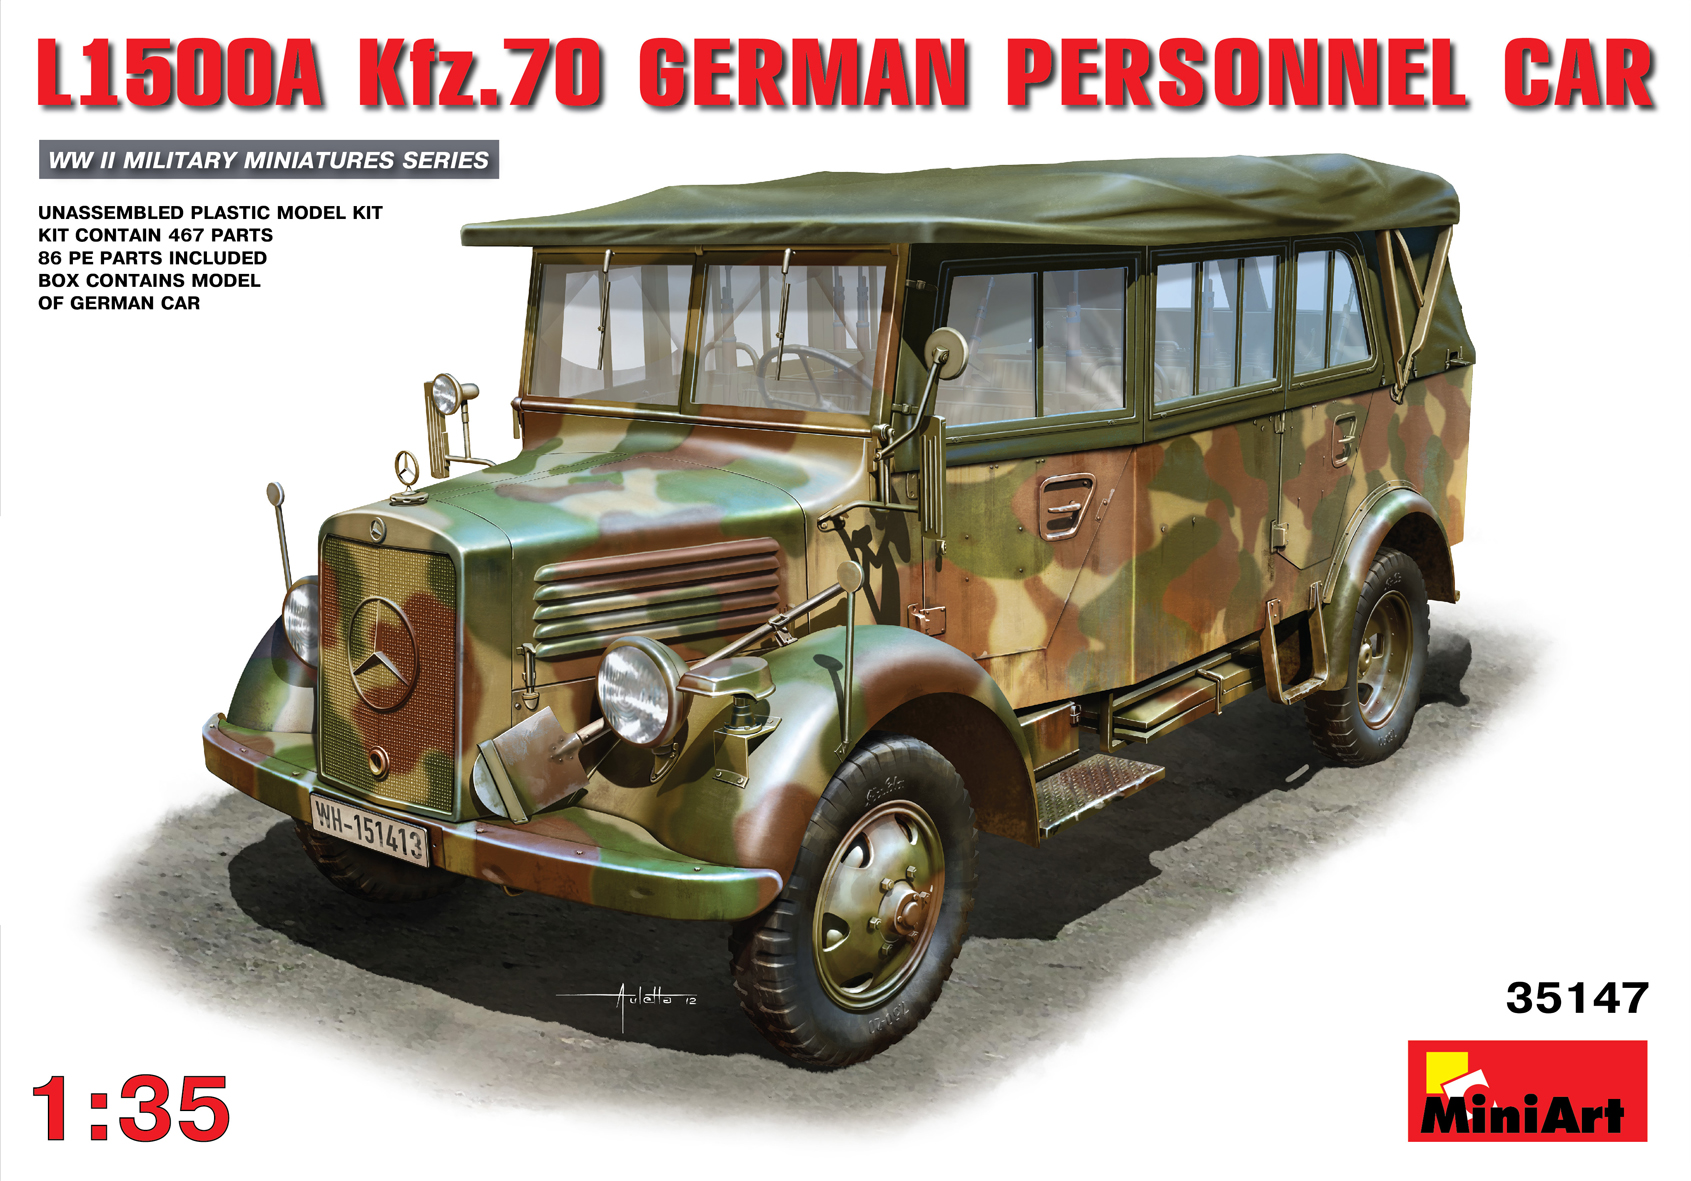 L1500A Kfz.70 German Personnel Car